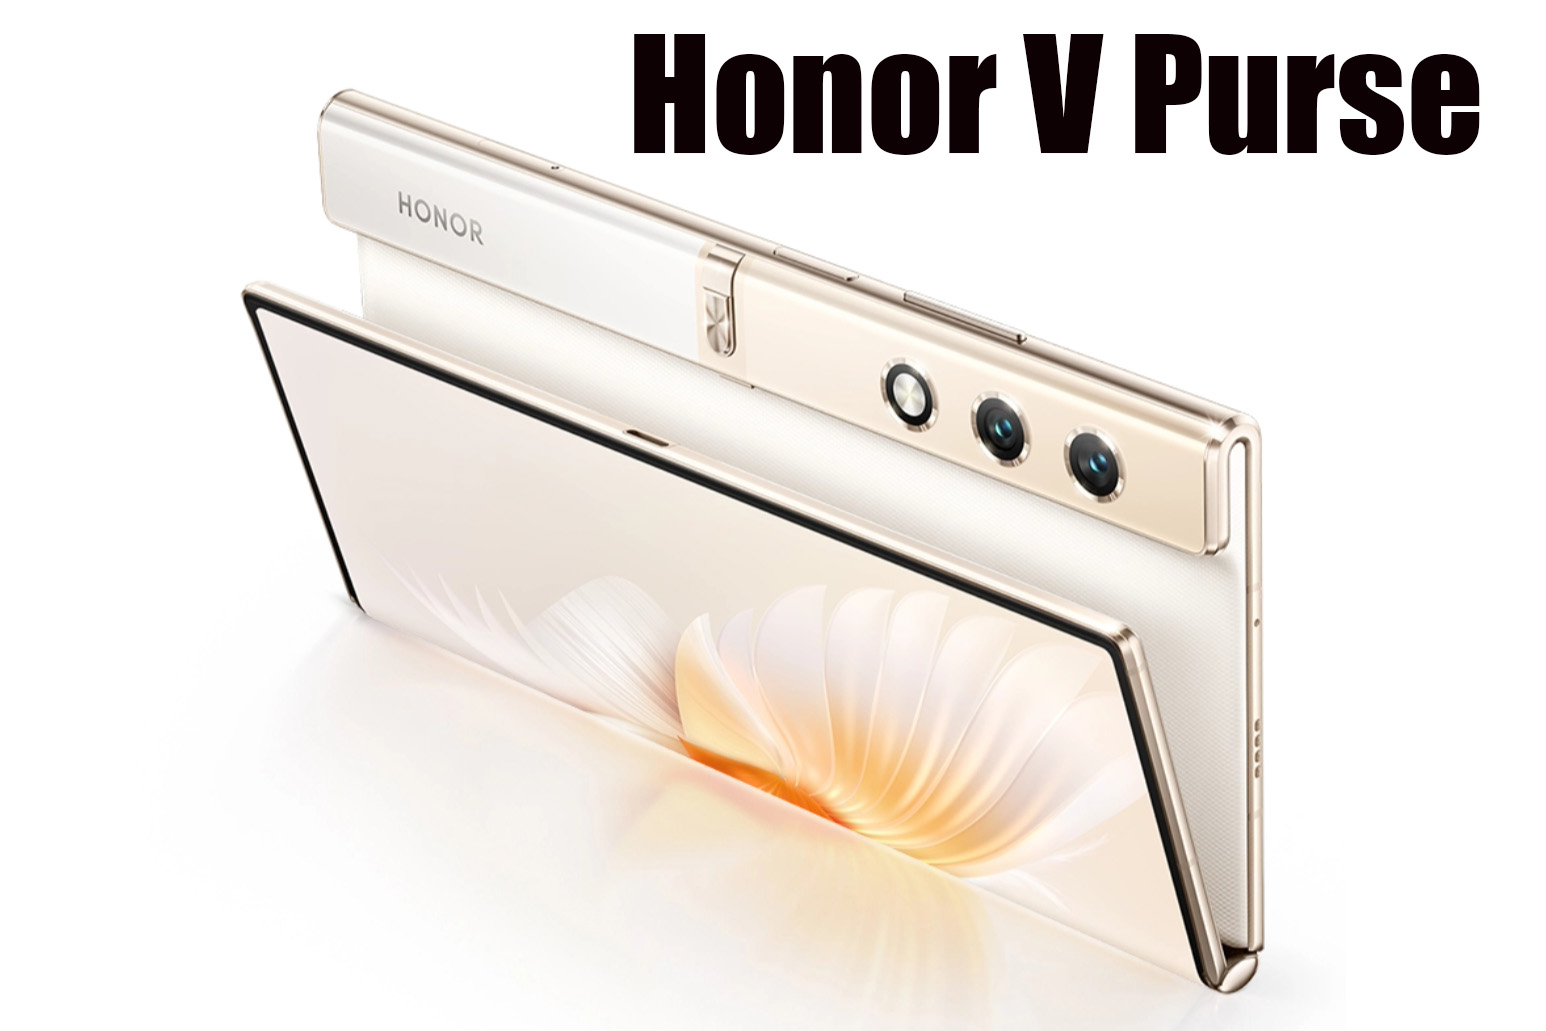 Honor V Purse Review: Stylish, Slim and Big Folding